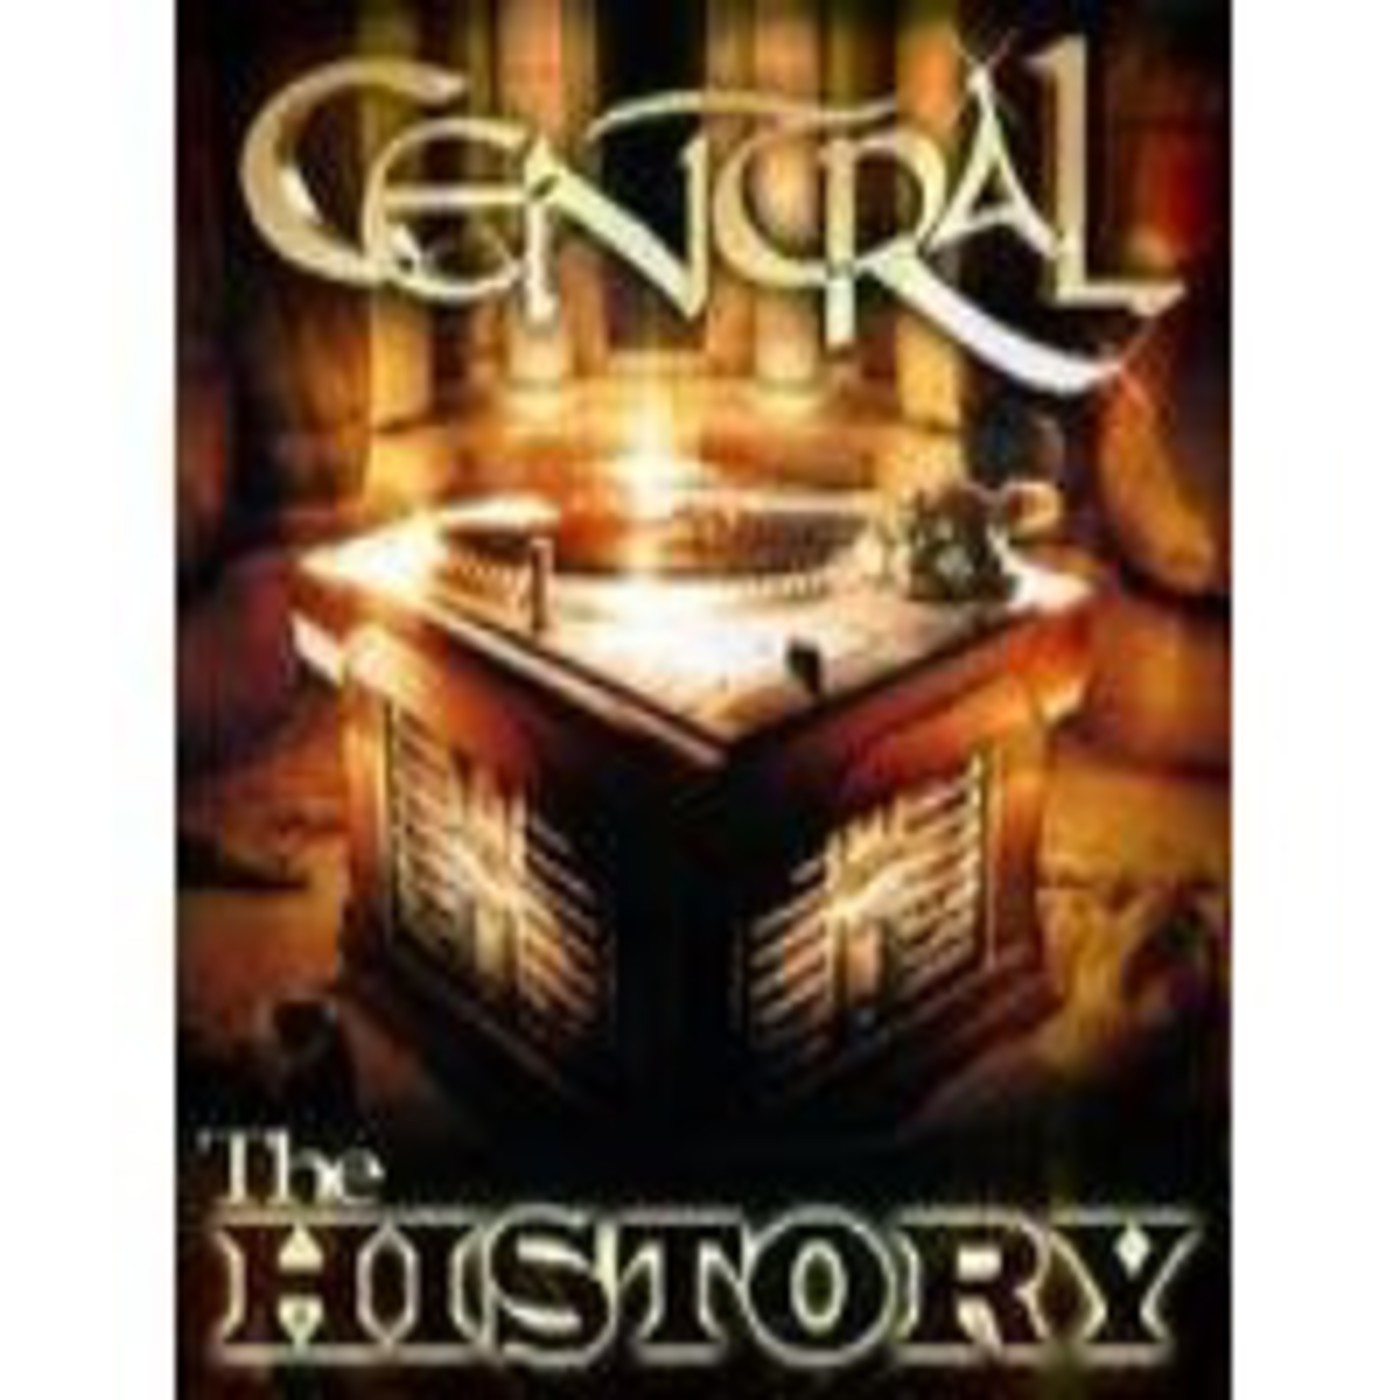 Central The History 96-00 en Central Rock en mp3(09/06 a 